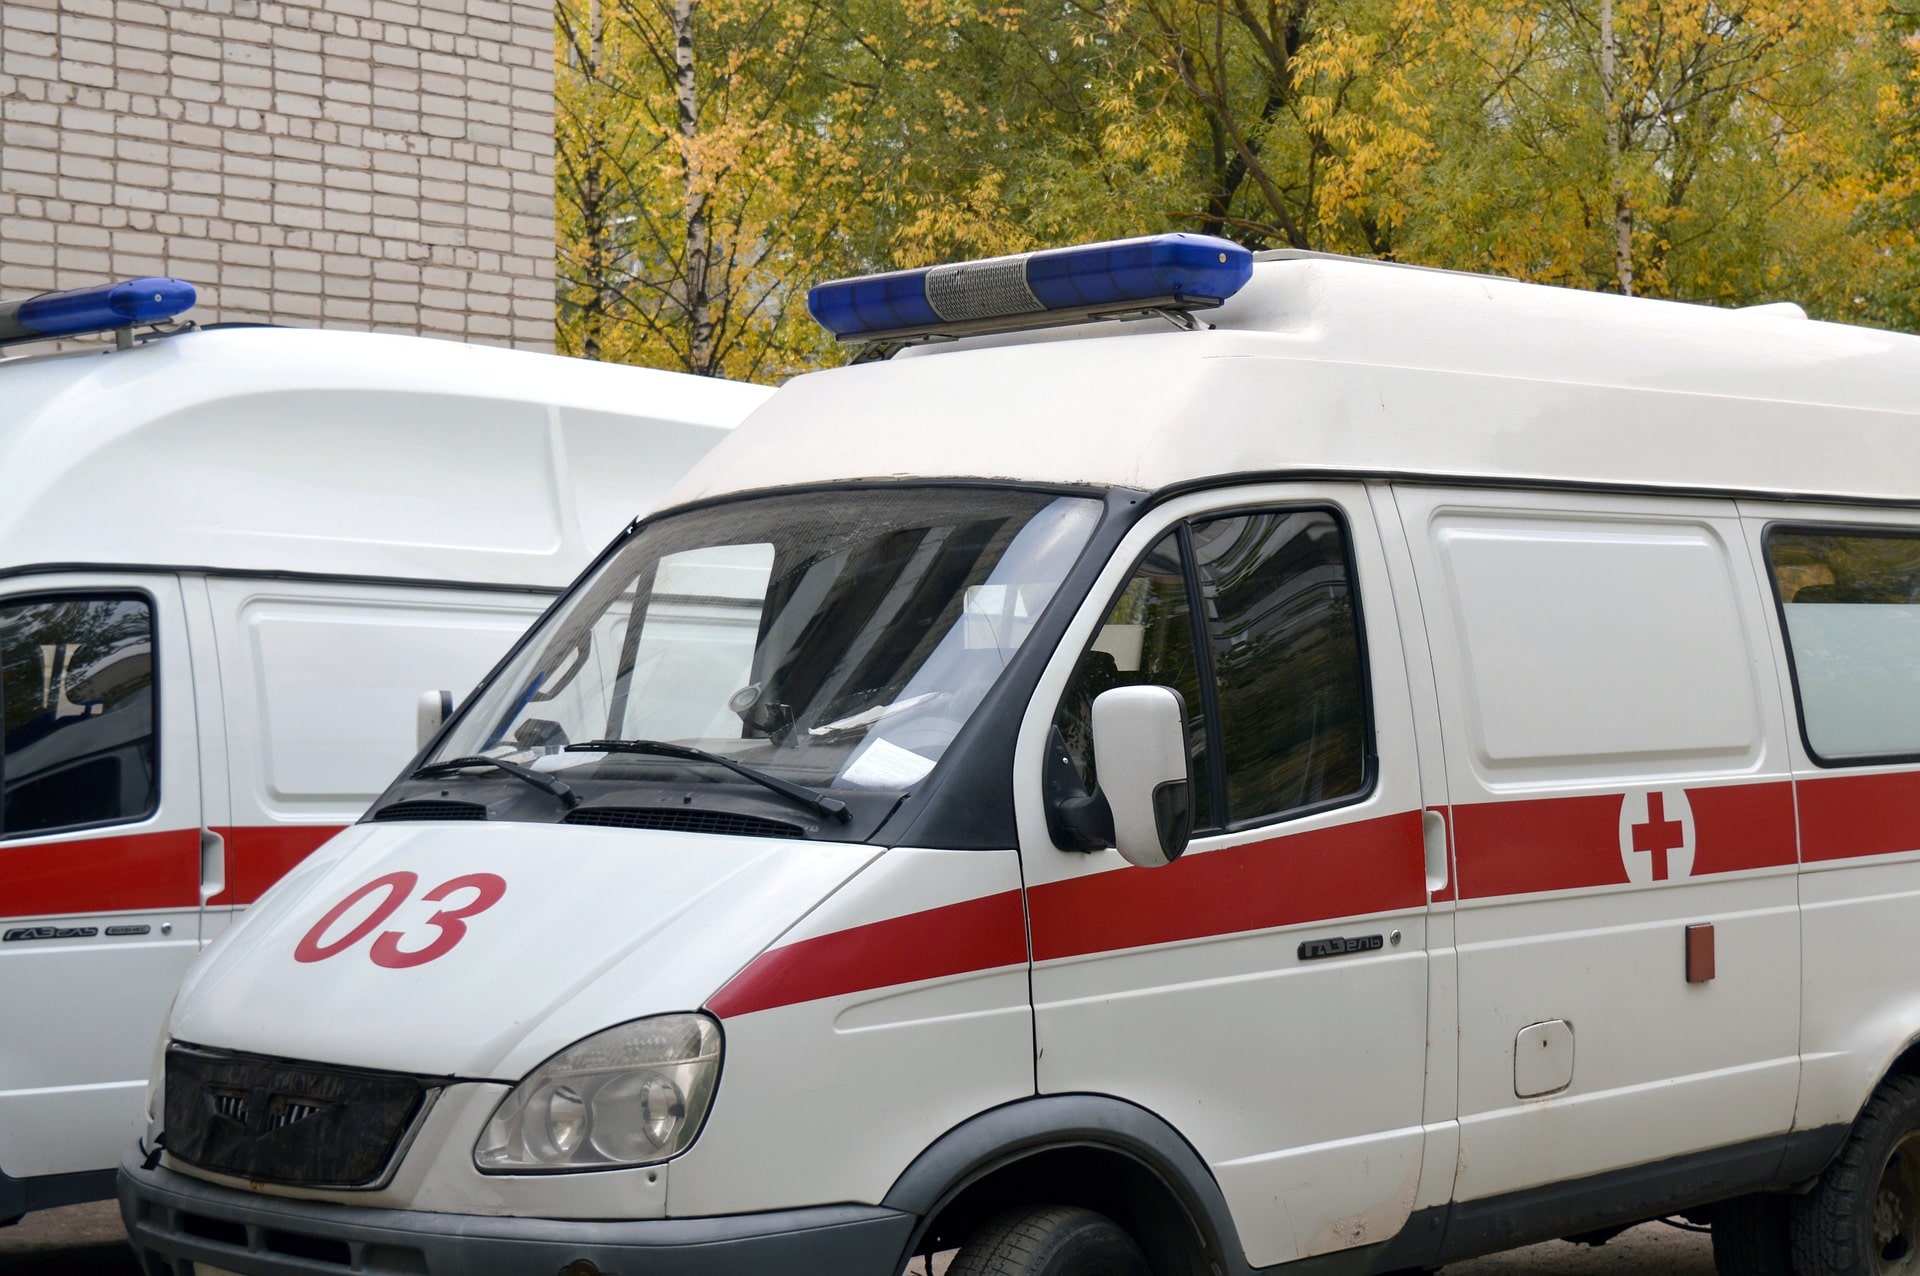 Vad kostar en ambulans? \u2014 Linkk - Aktuella nyheter i Sverige